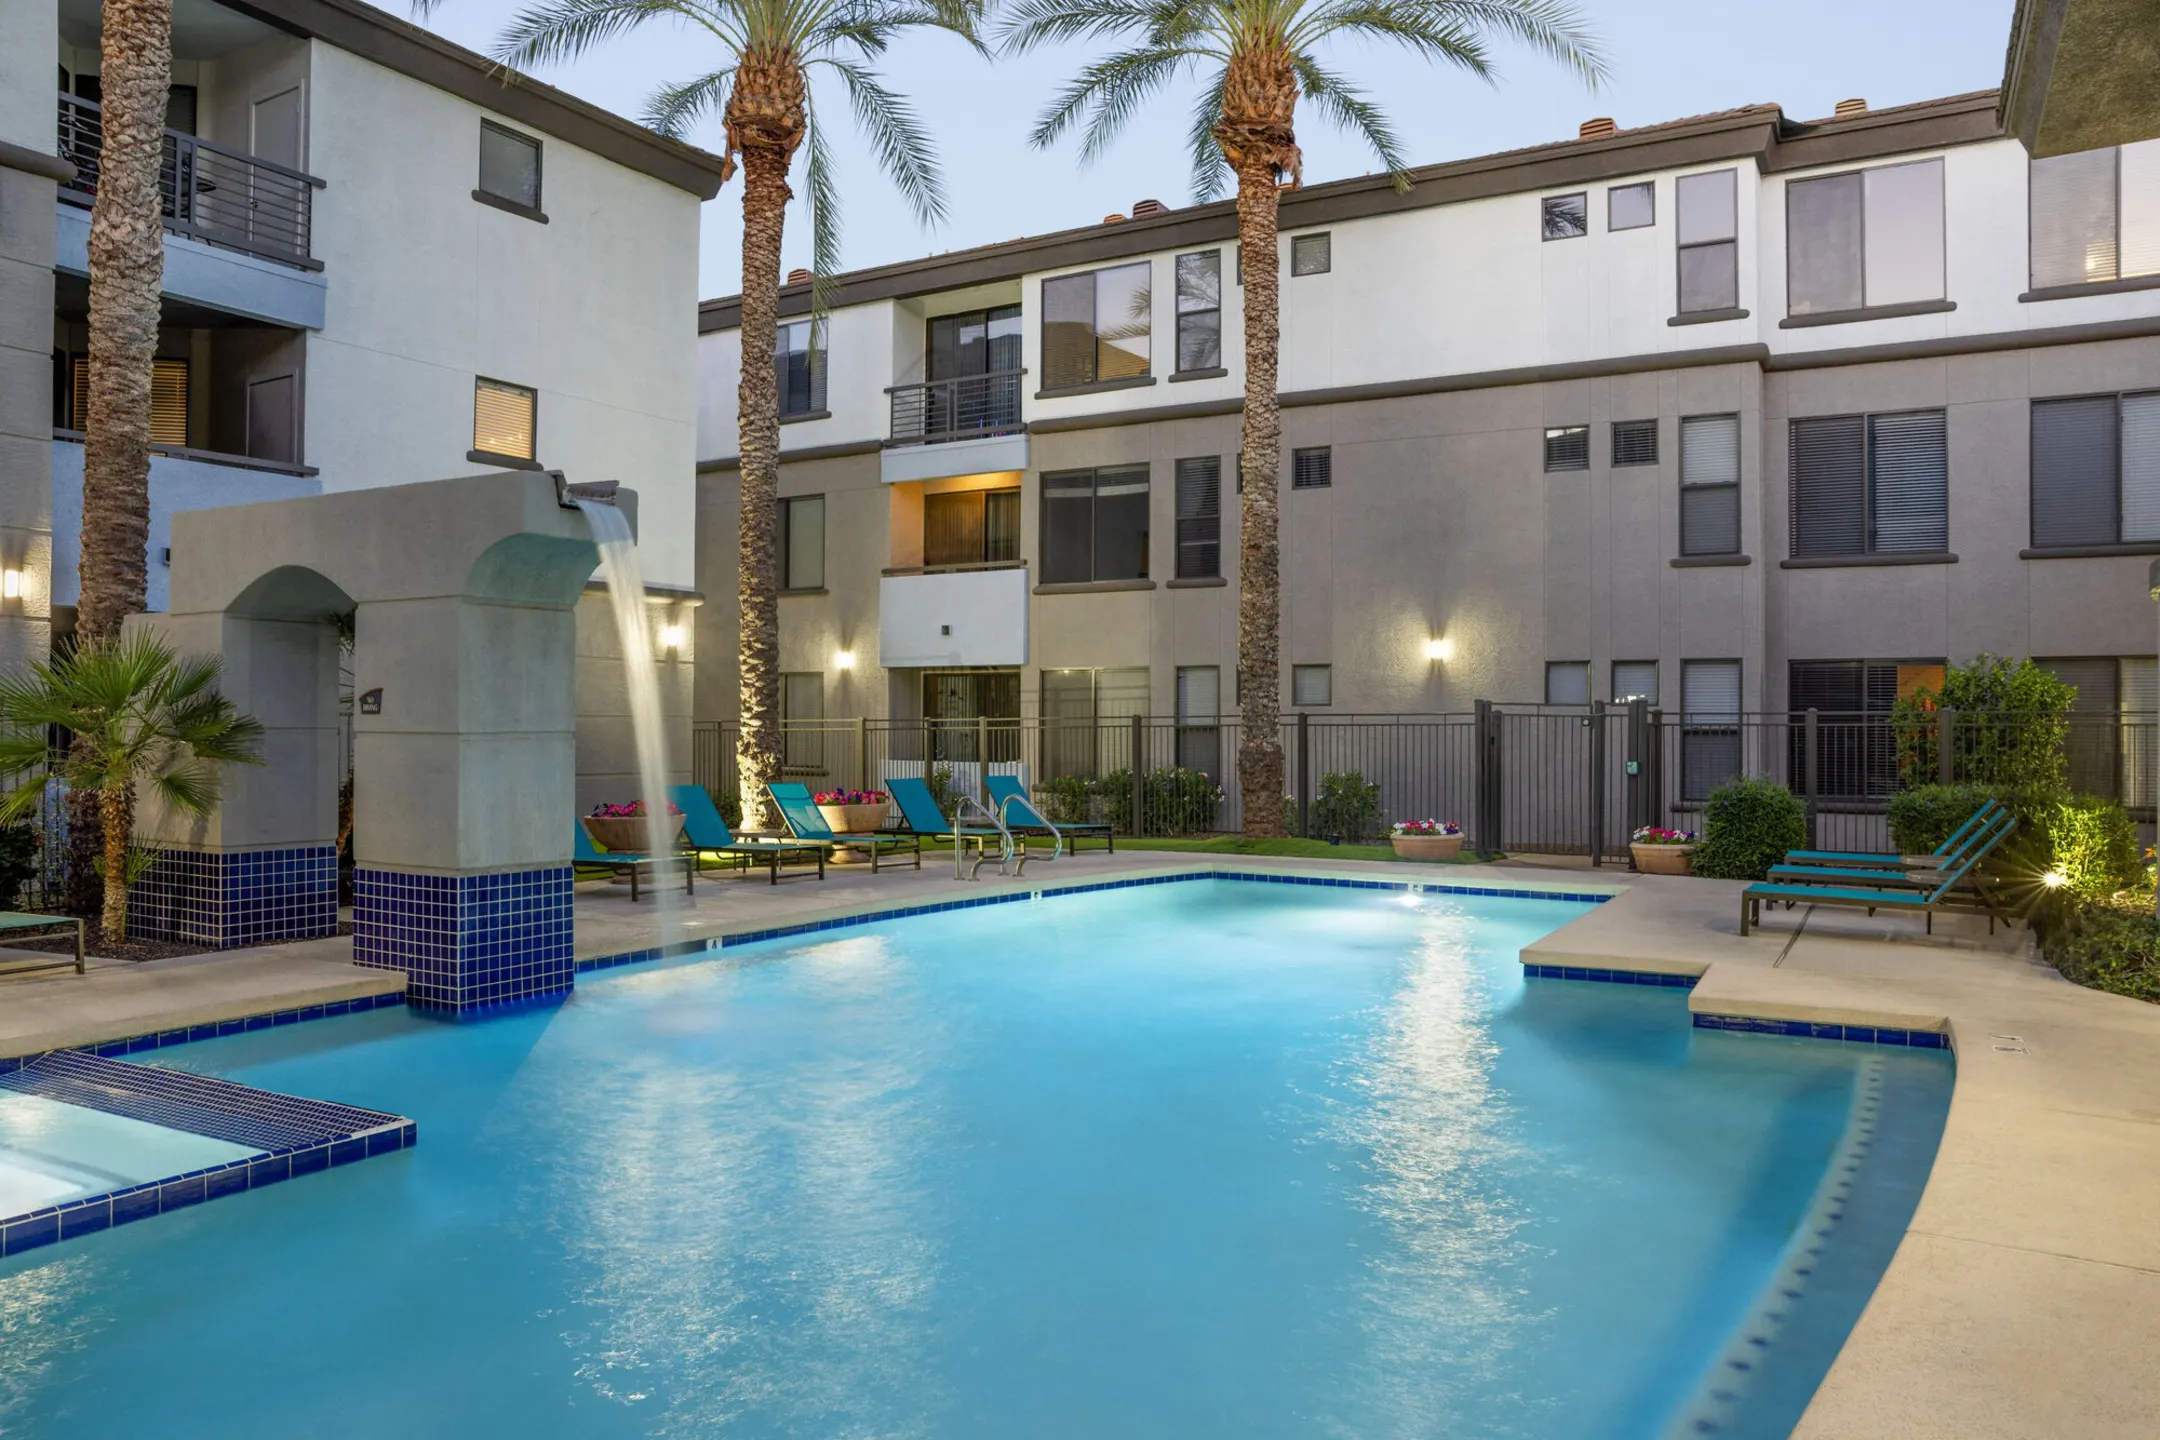 Monte Viejo - 2220 E Beardsley Rd | Phoenix, AZ Apartments for Rent | Rent.